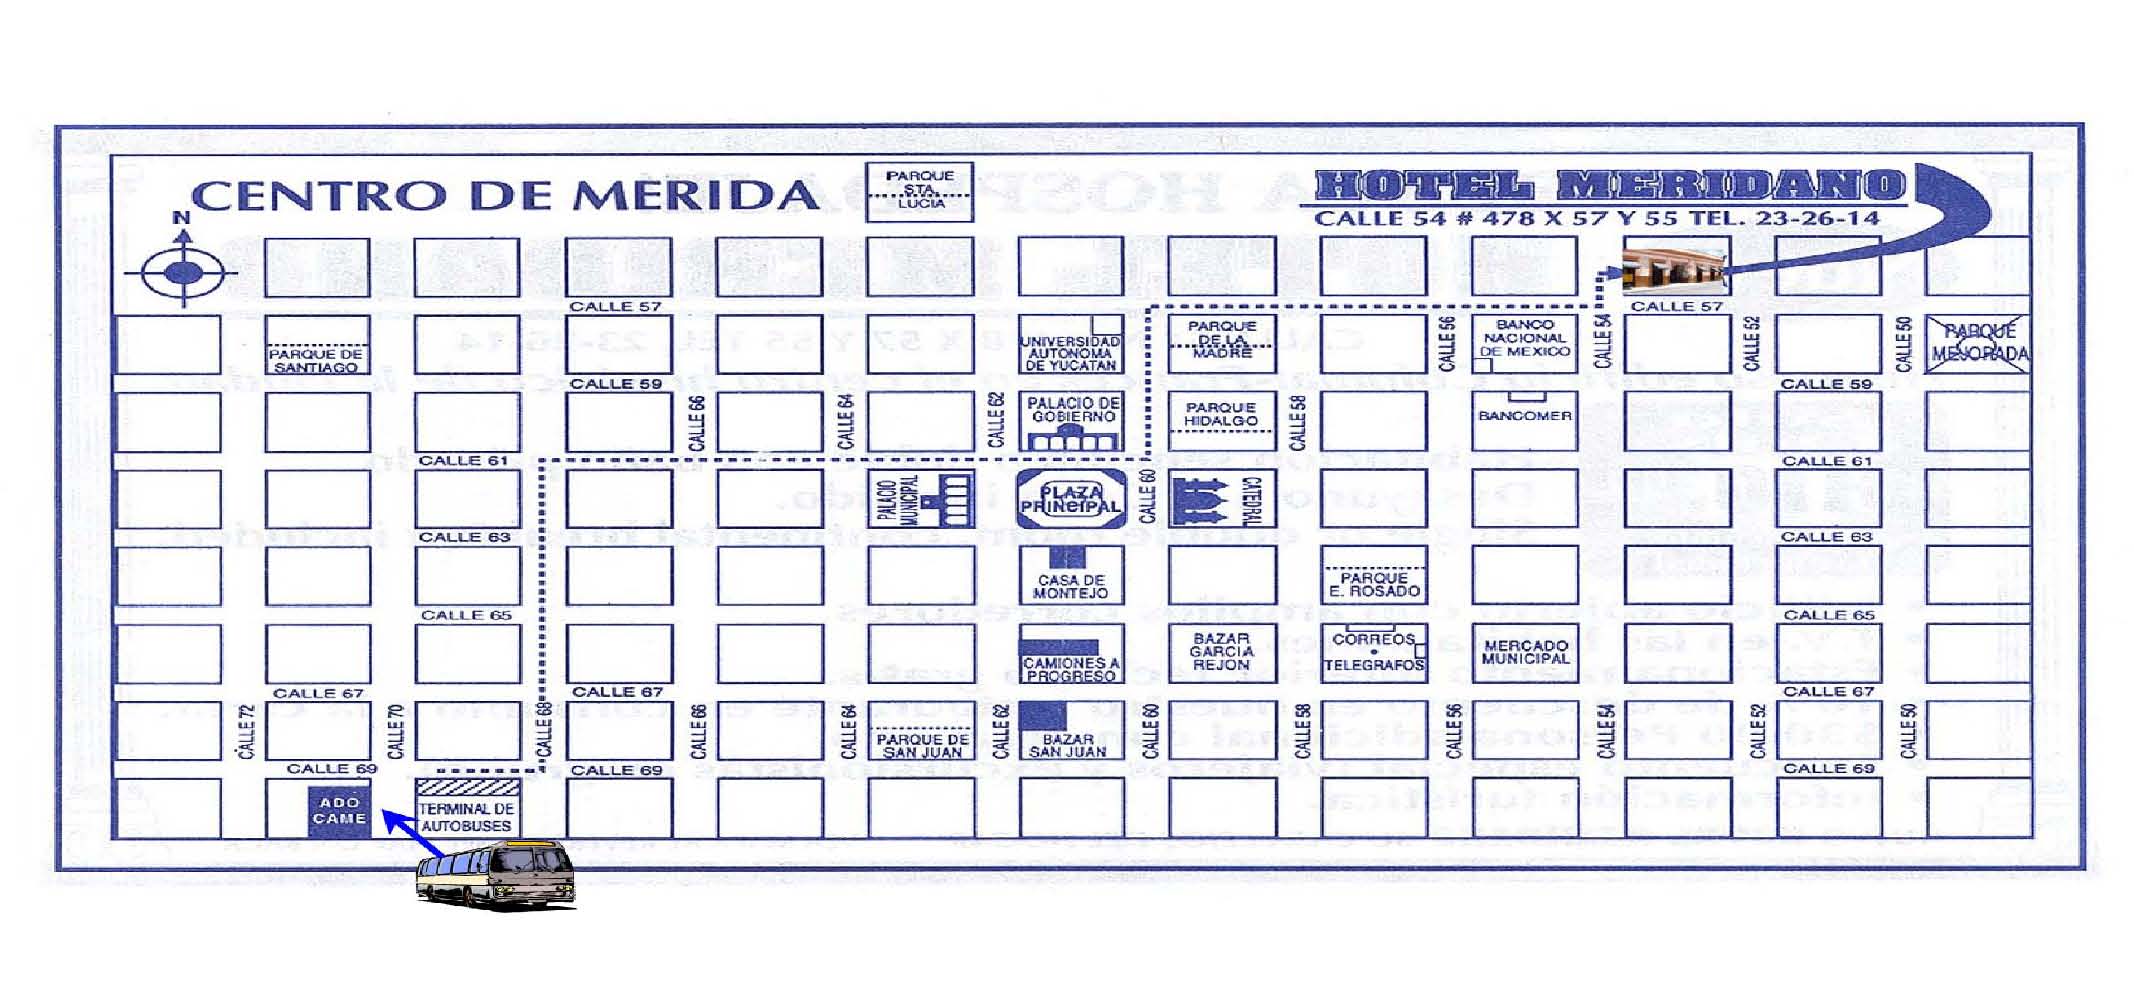 Hotel Meridano Merida historic center large map directions to bus station